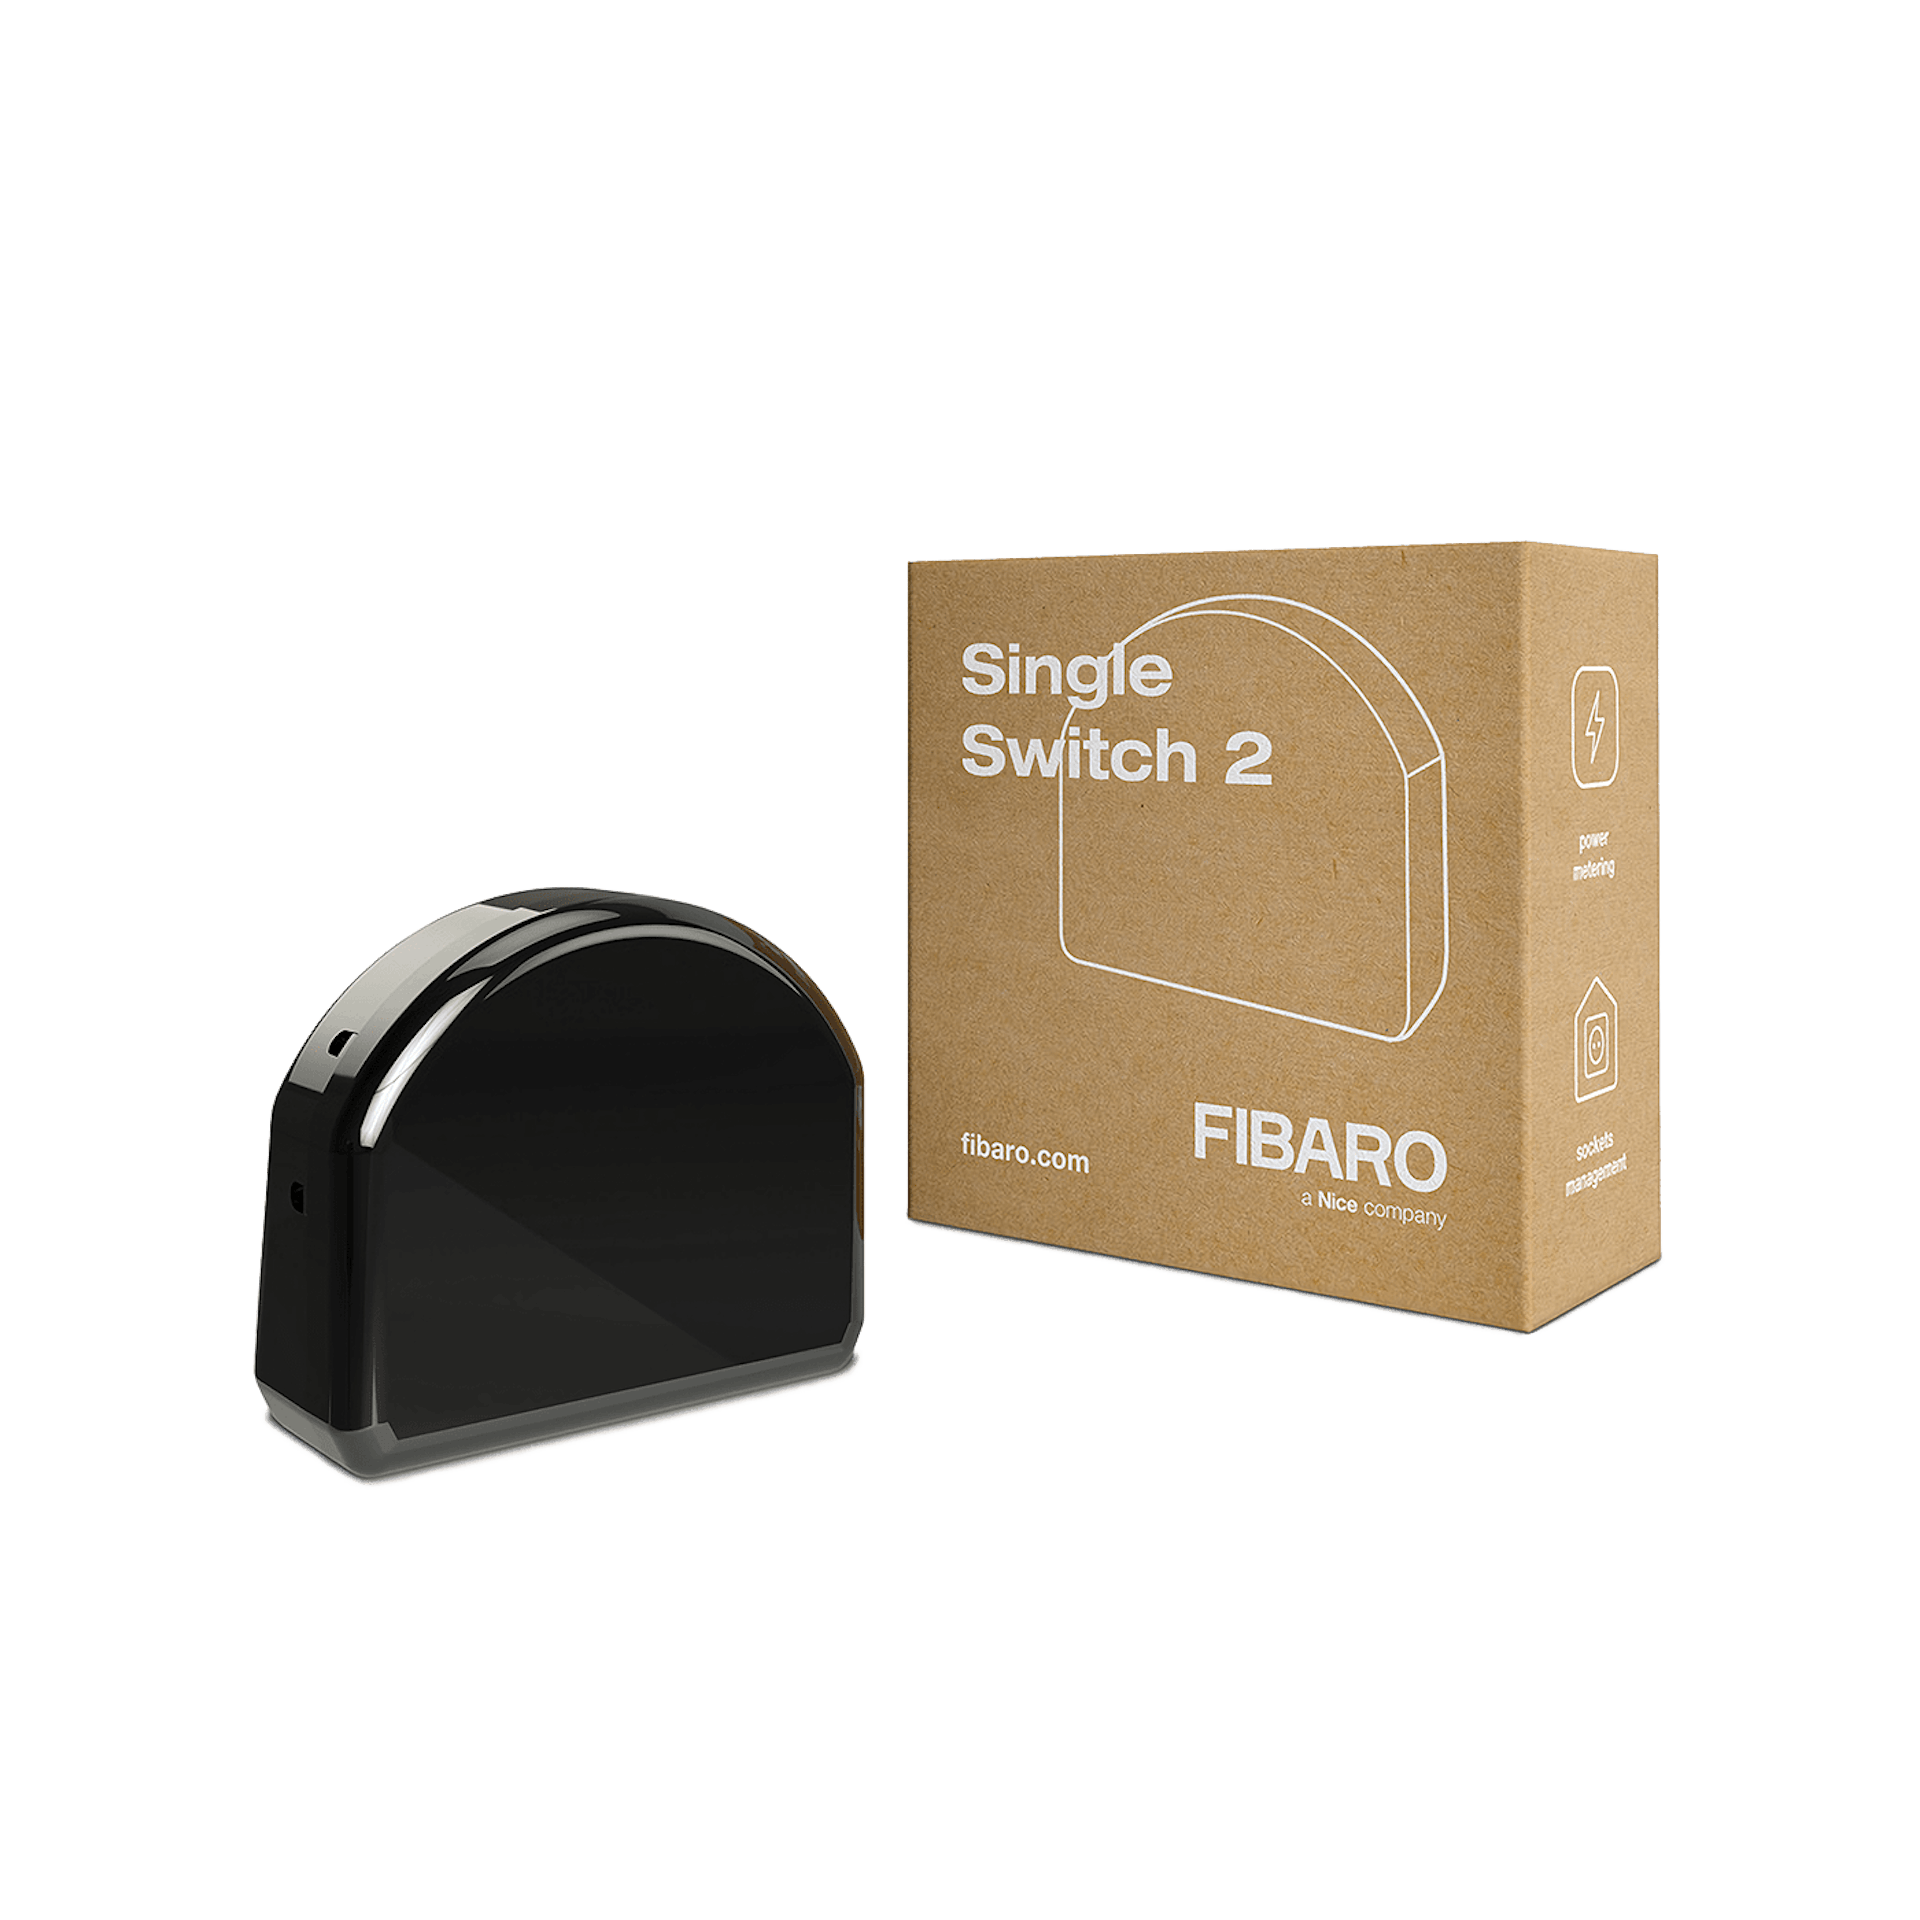 Fibaro Single Switch 2 - Image 2